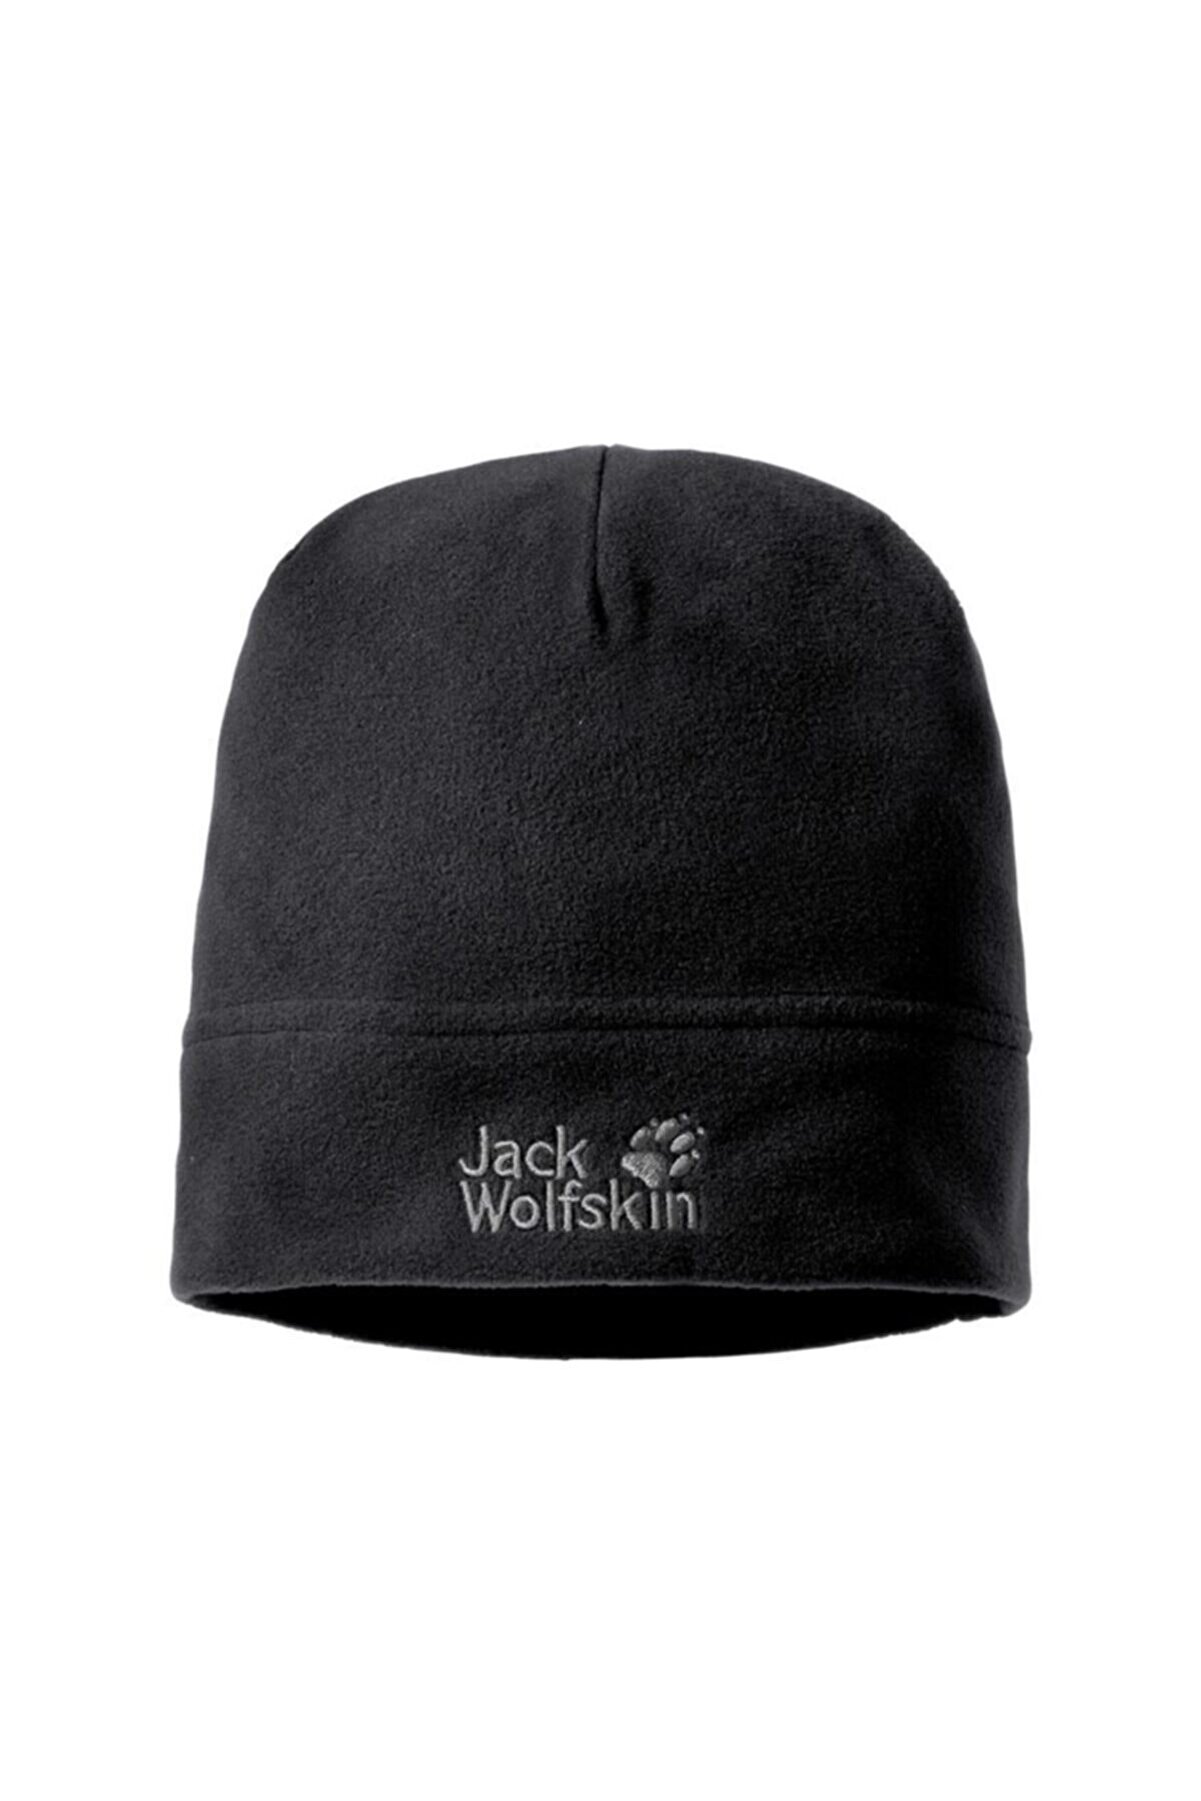 Jack Wolfskin Real Stuff Cap